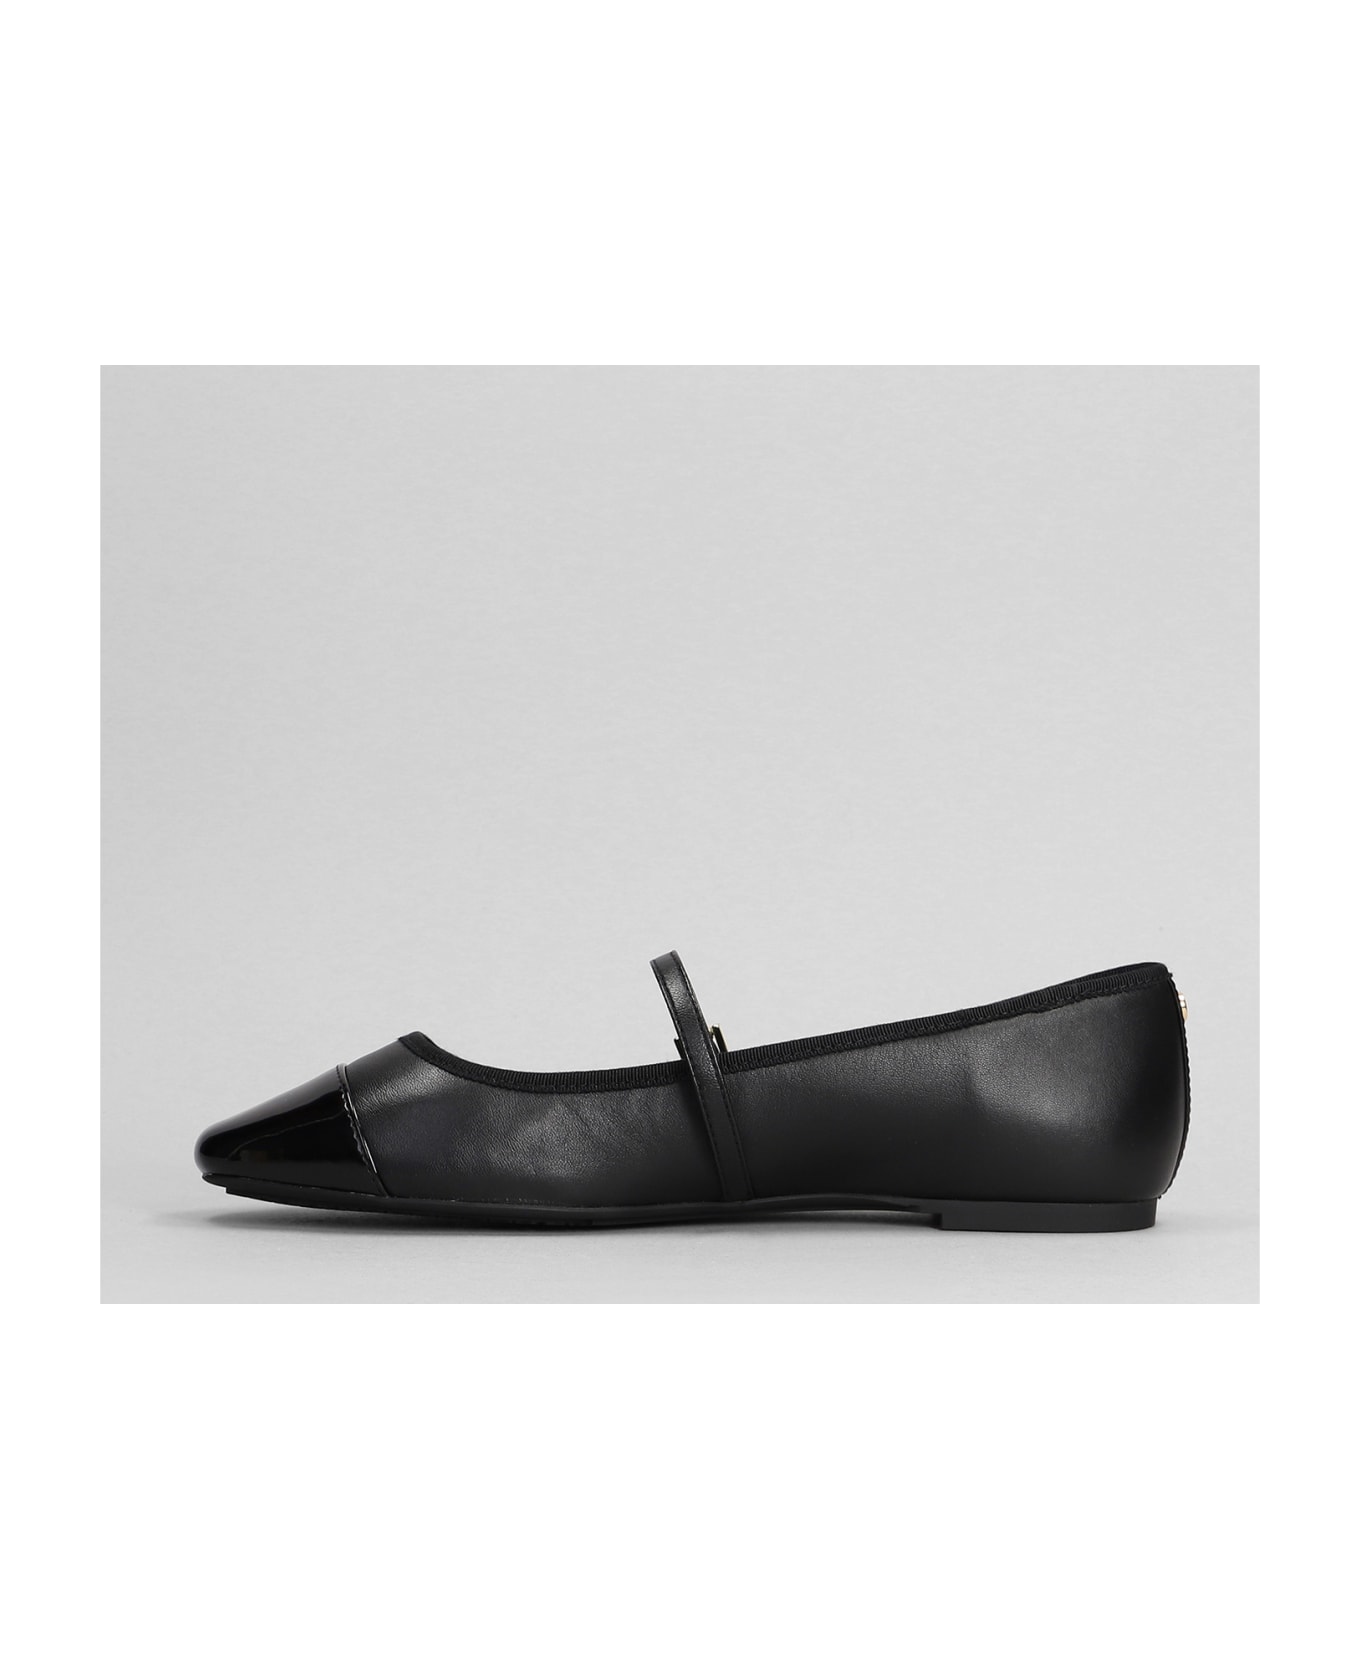 Michael Kors Mae Flex Ballet Flats In Black Leather - black フラットシューズ